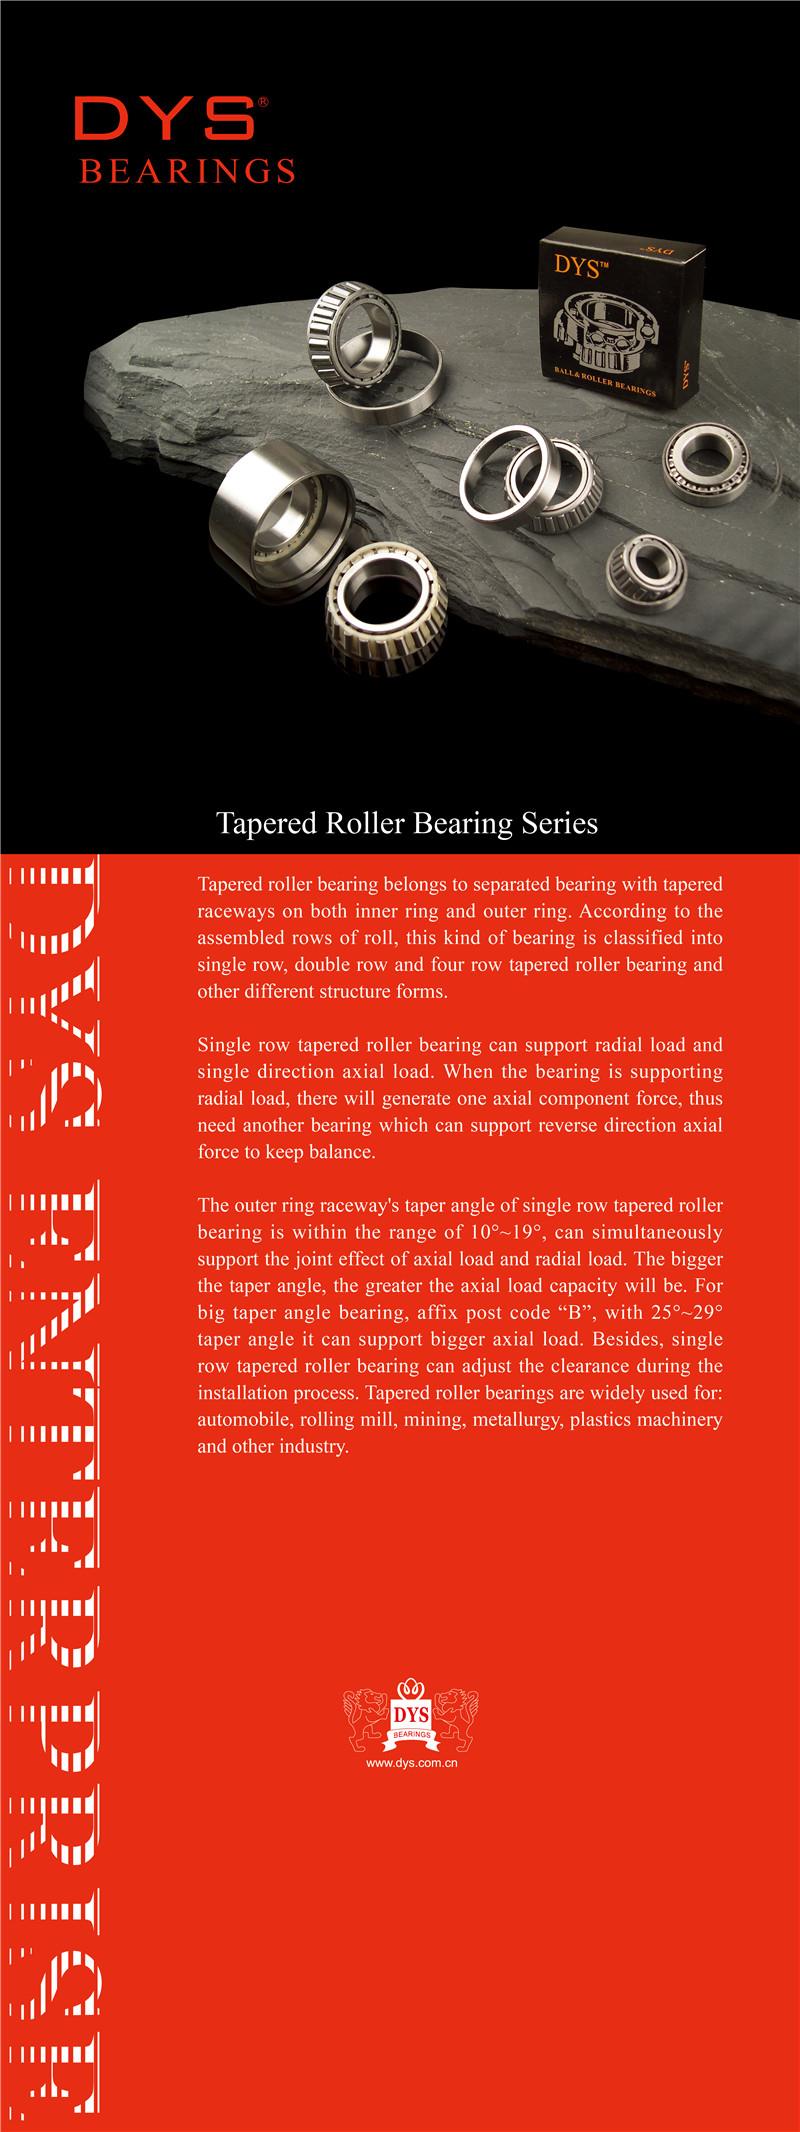 ????2015-Taper Roller Bearings-????.jpg